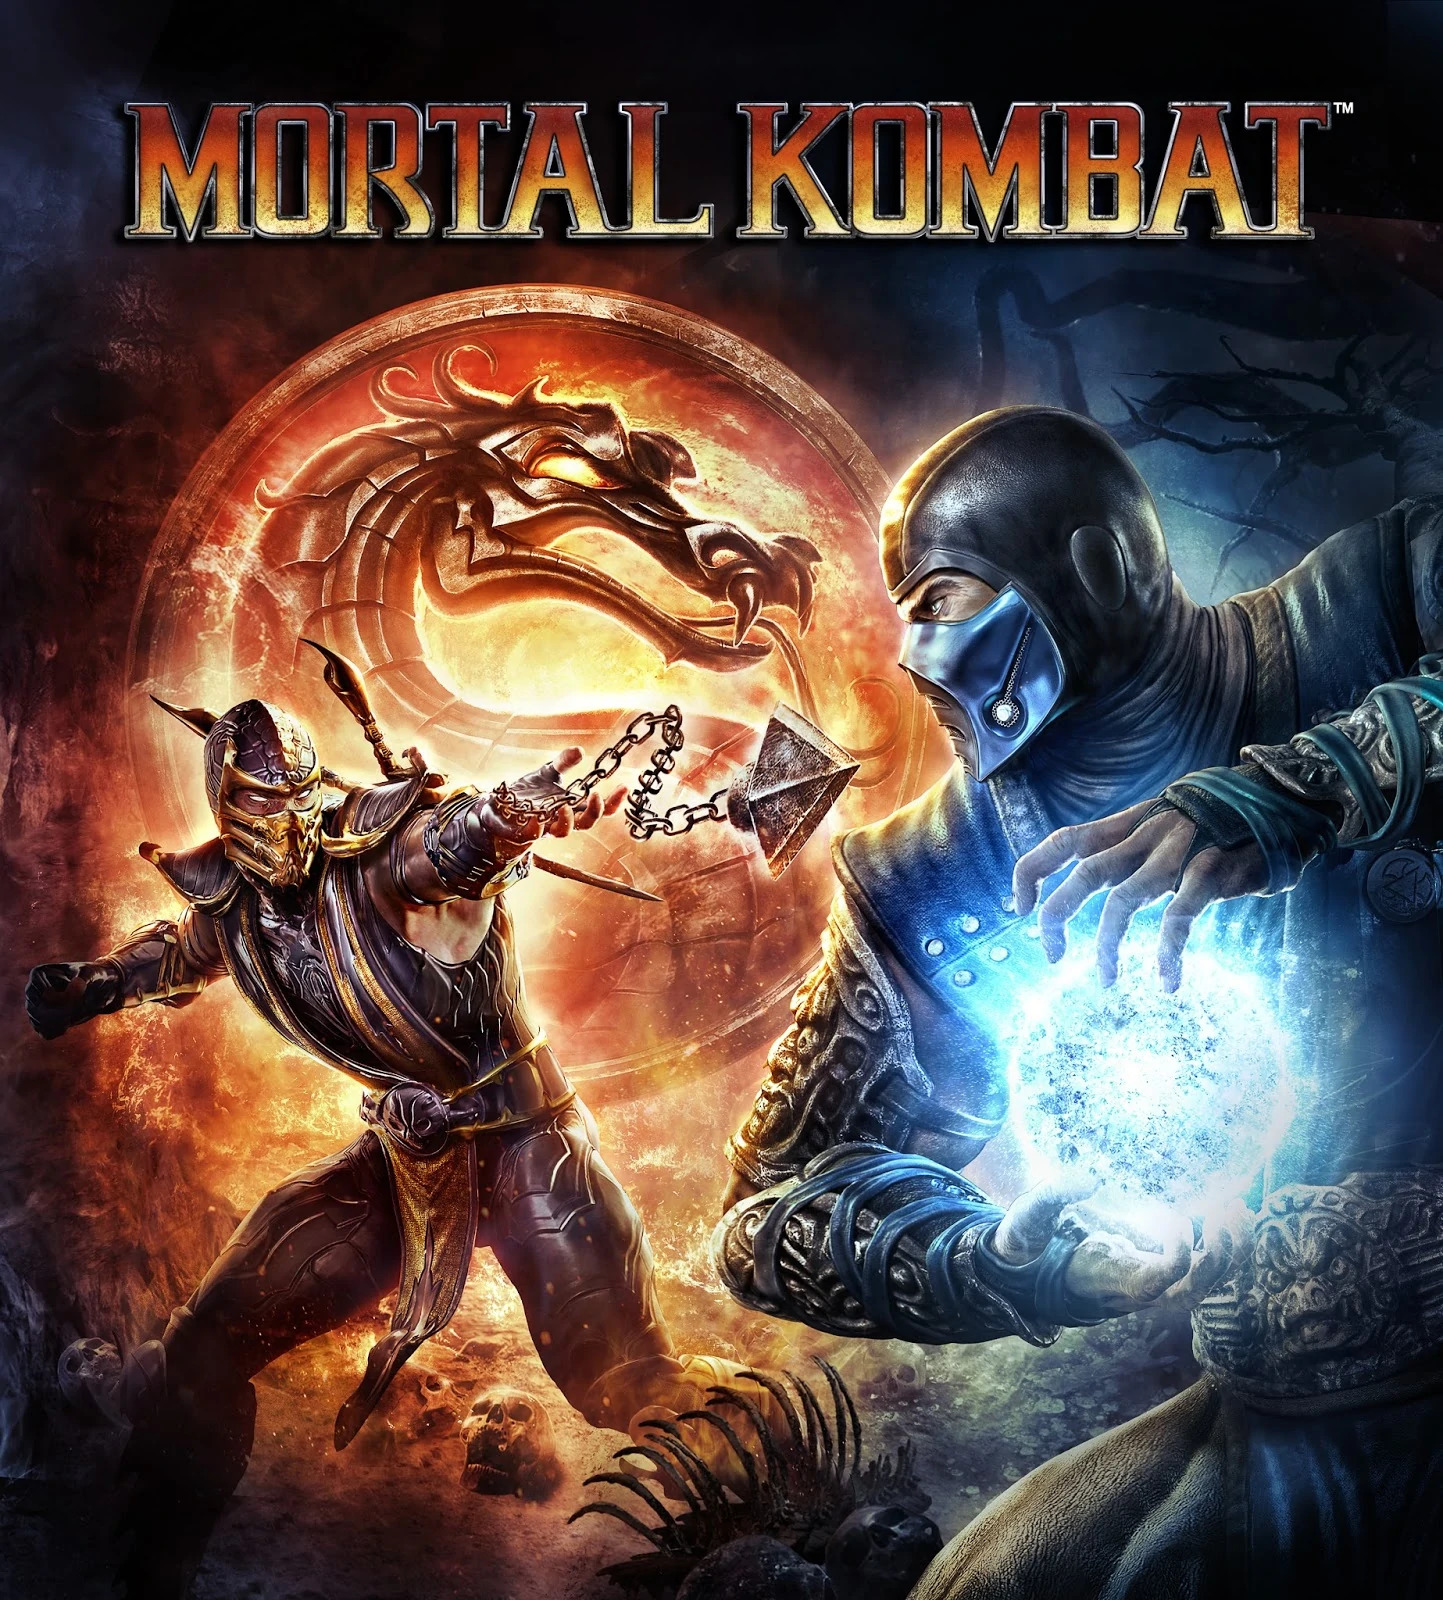 We must get shao kahn and onaga in mortal kombat 1 as playables : r/ MortalKombat